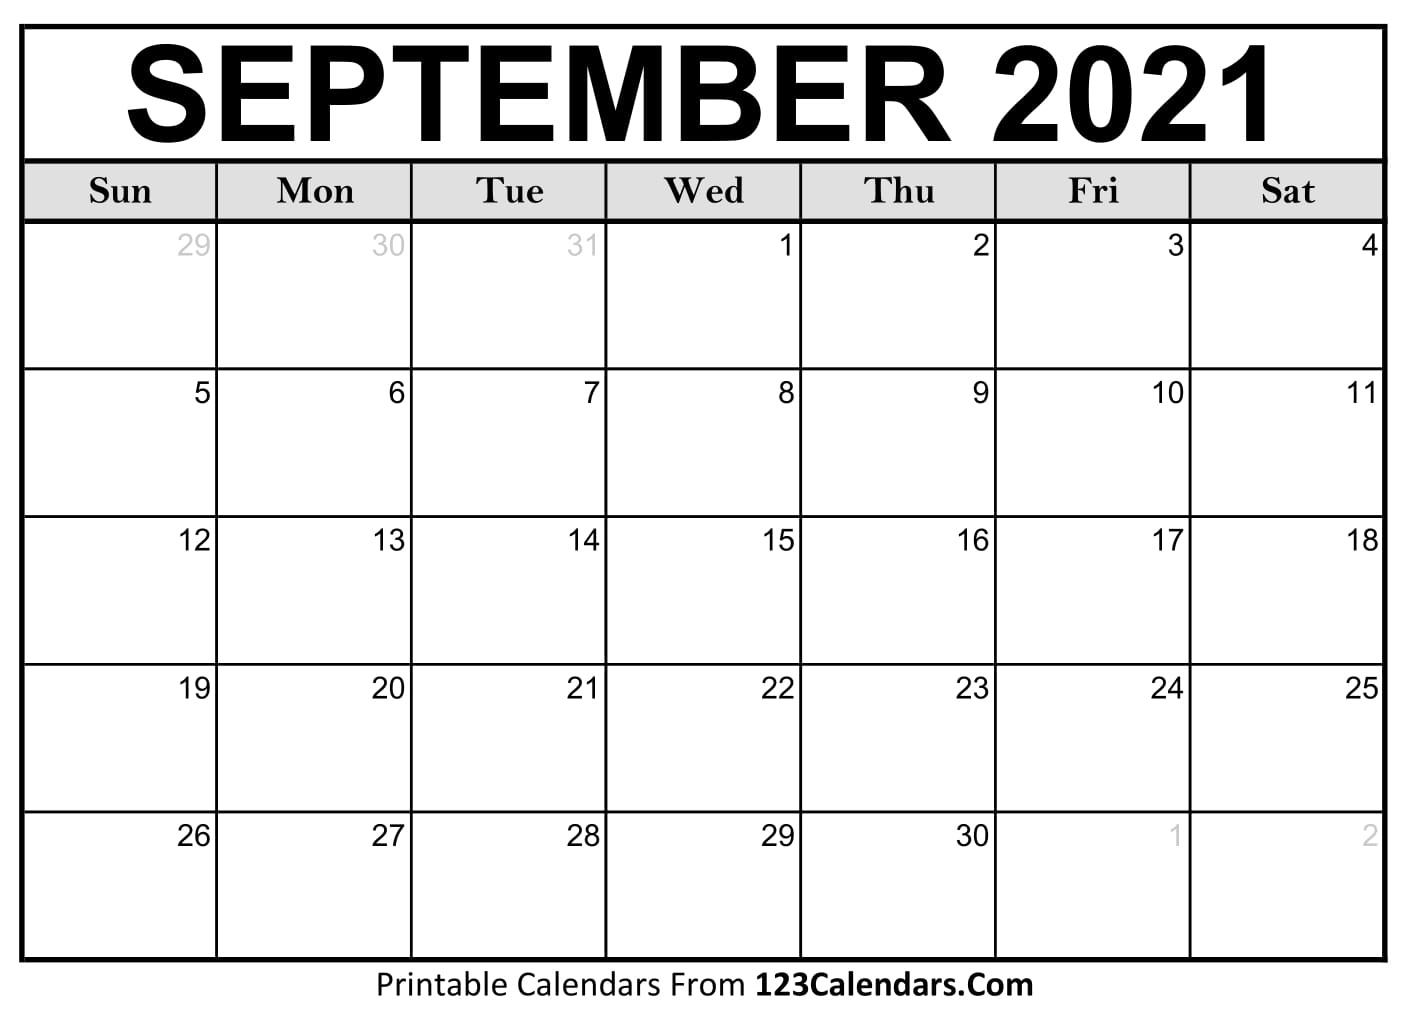 Printable September 2021 Calendar Templates - 123Calendars Calendar For August And September 2021